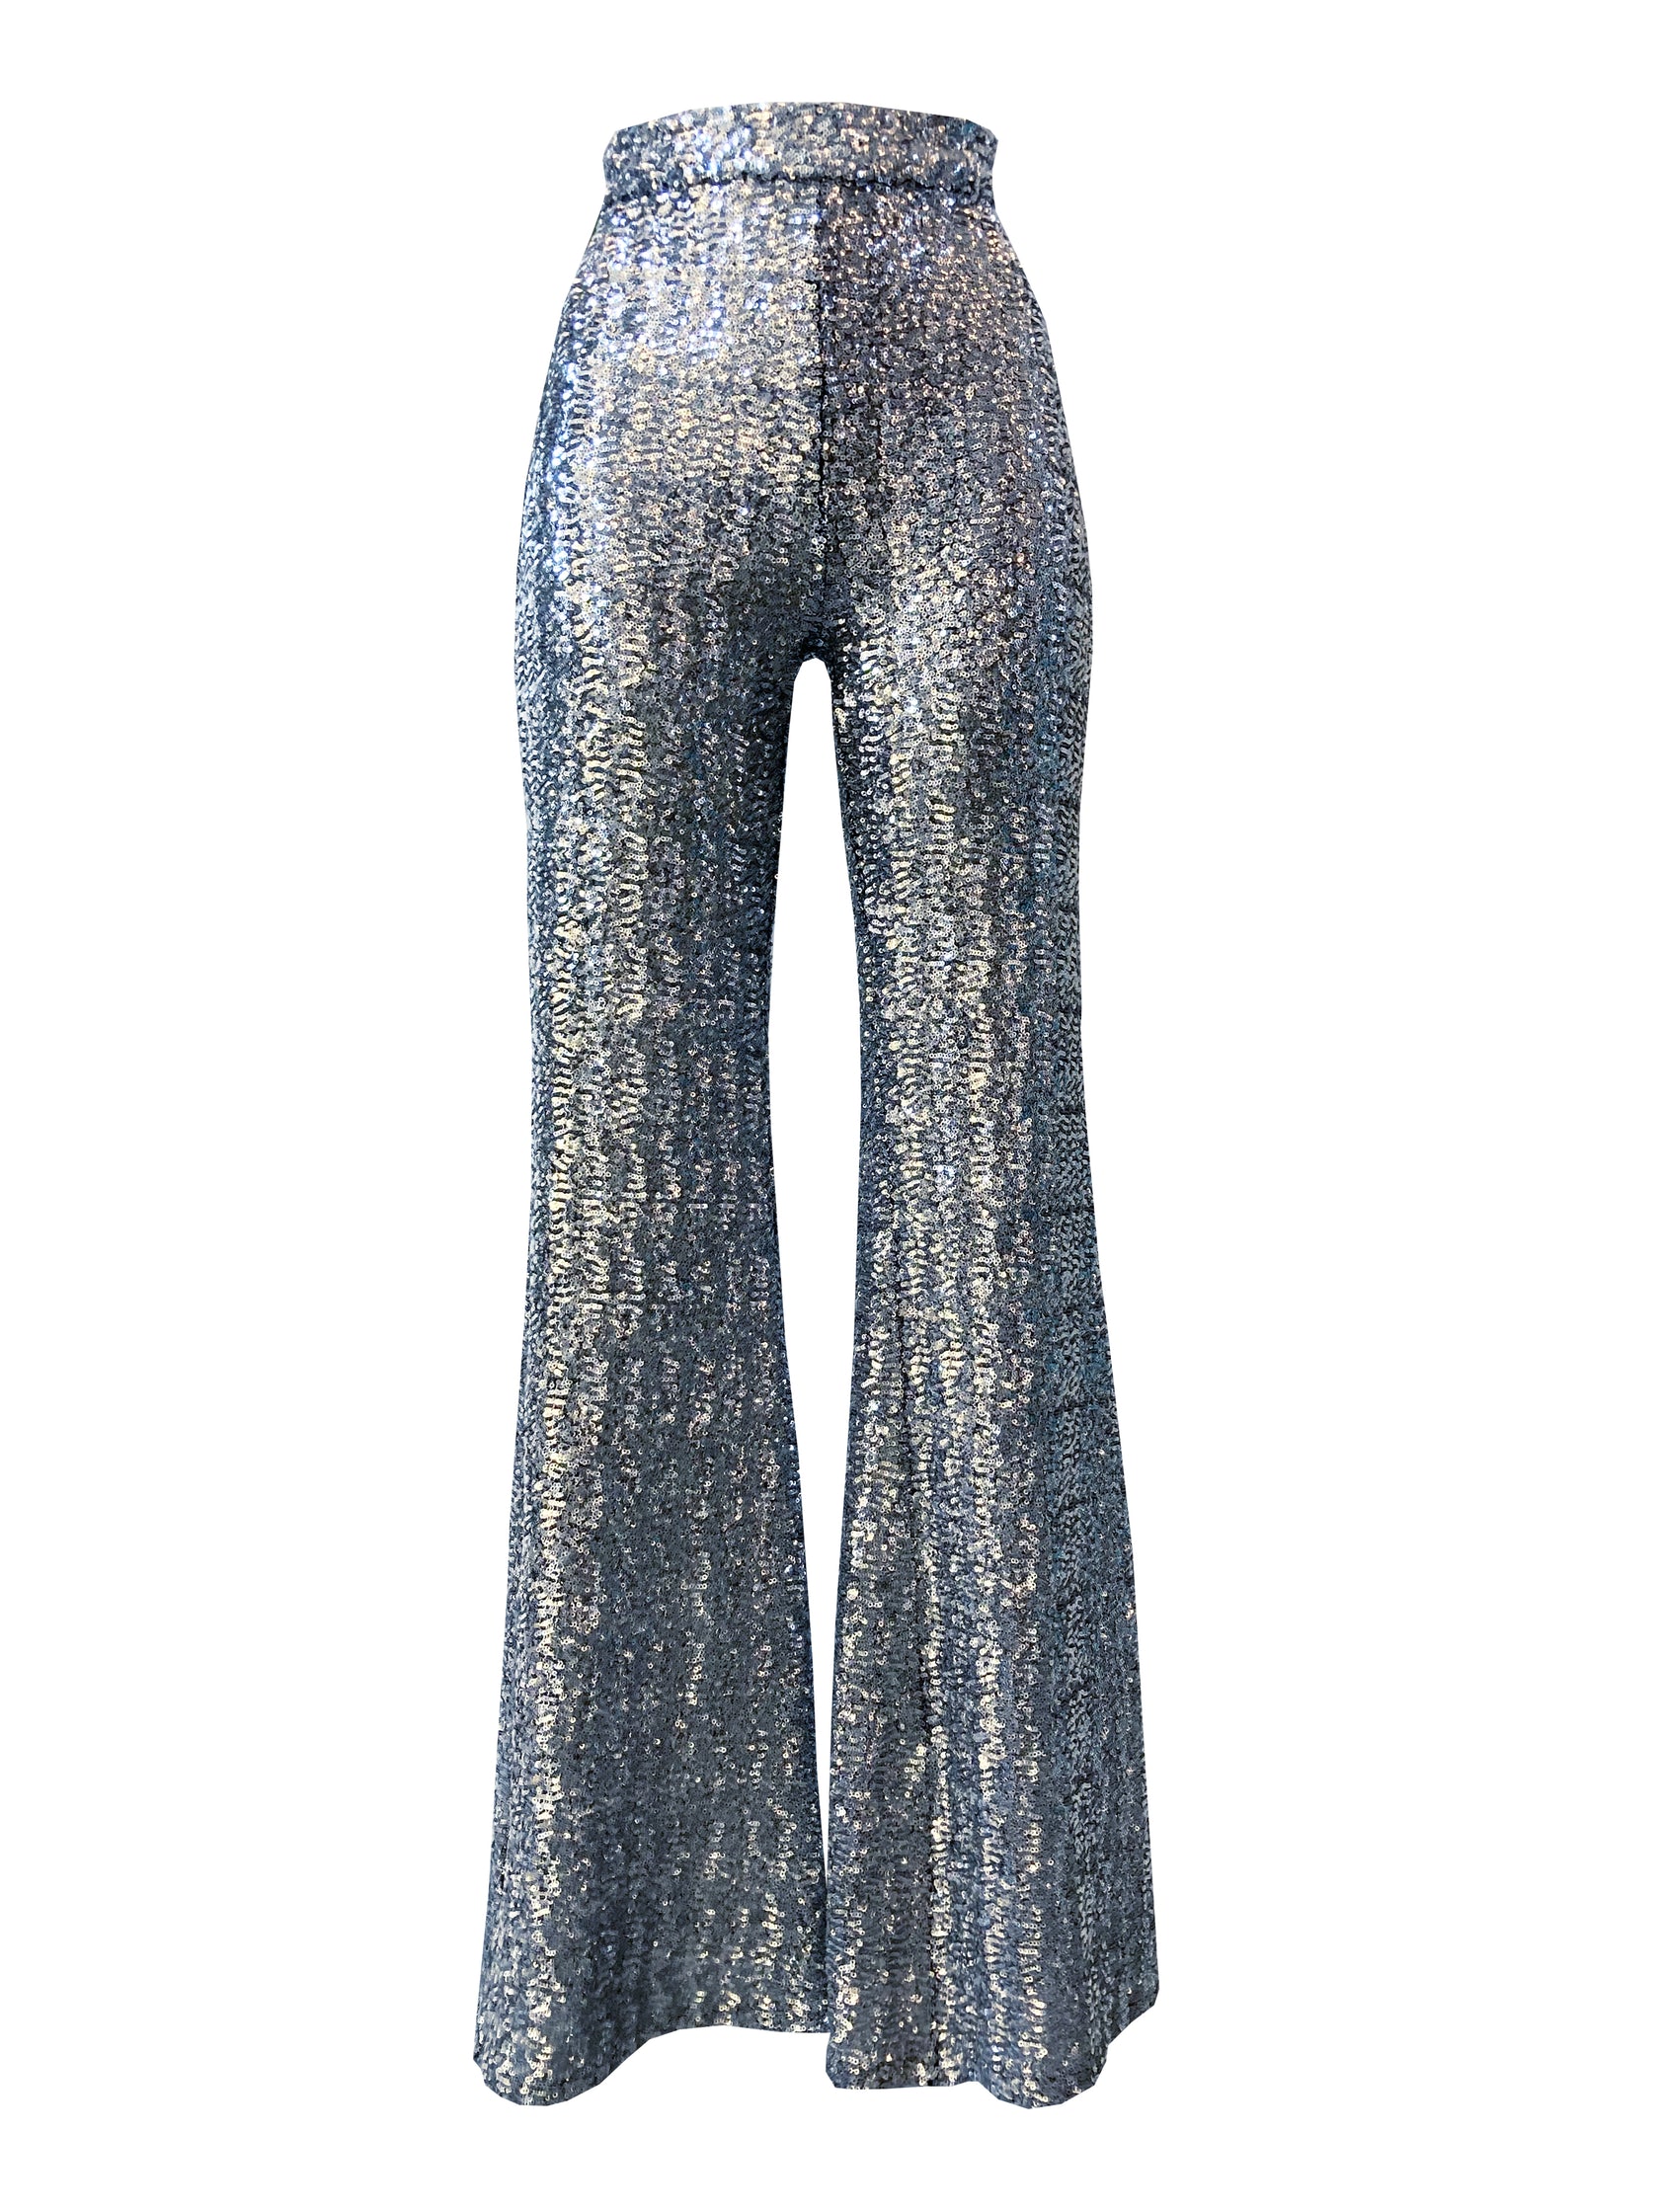 The Silver Sparkle pants – Hildur Yeoman